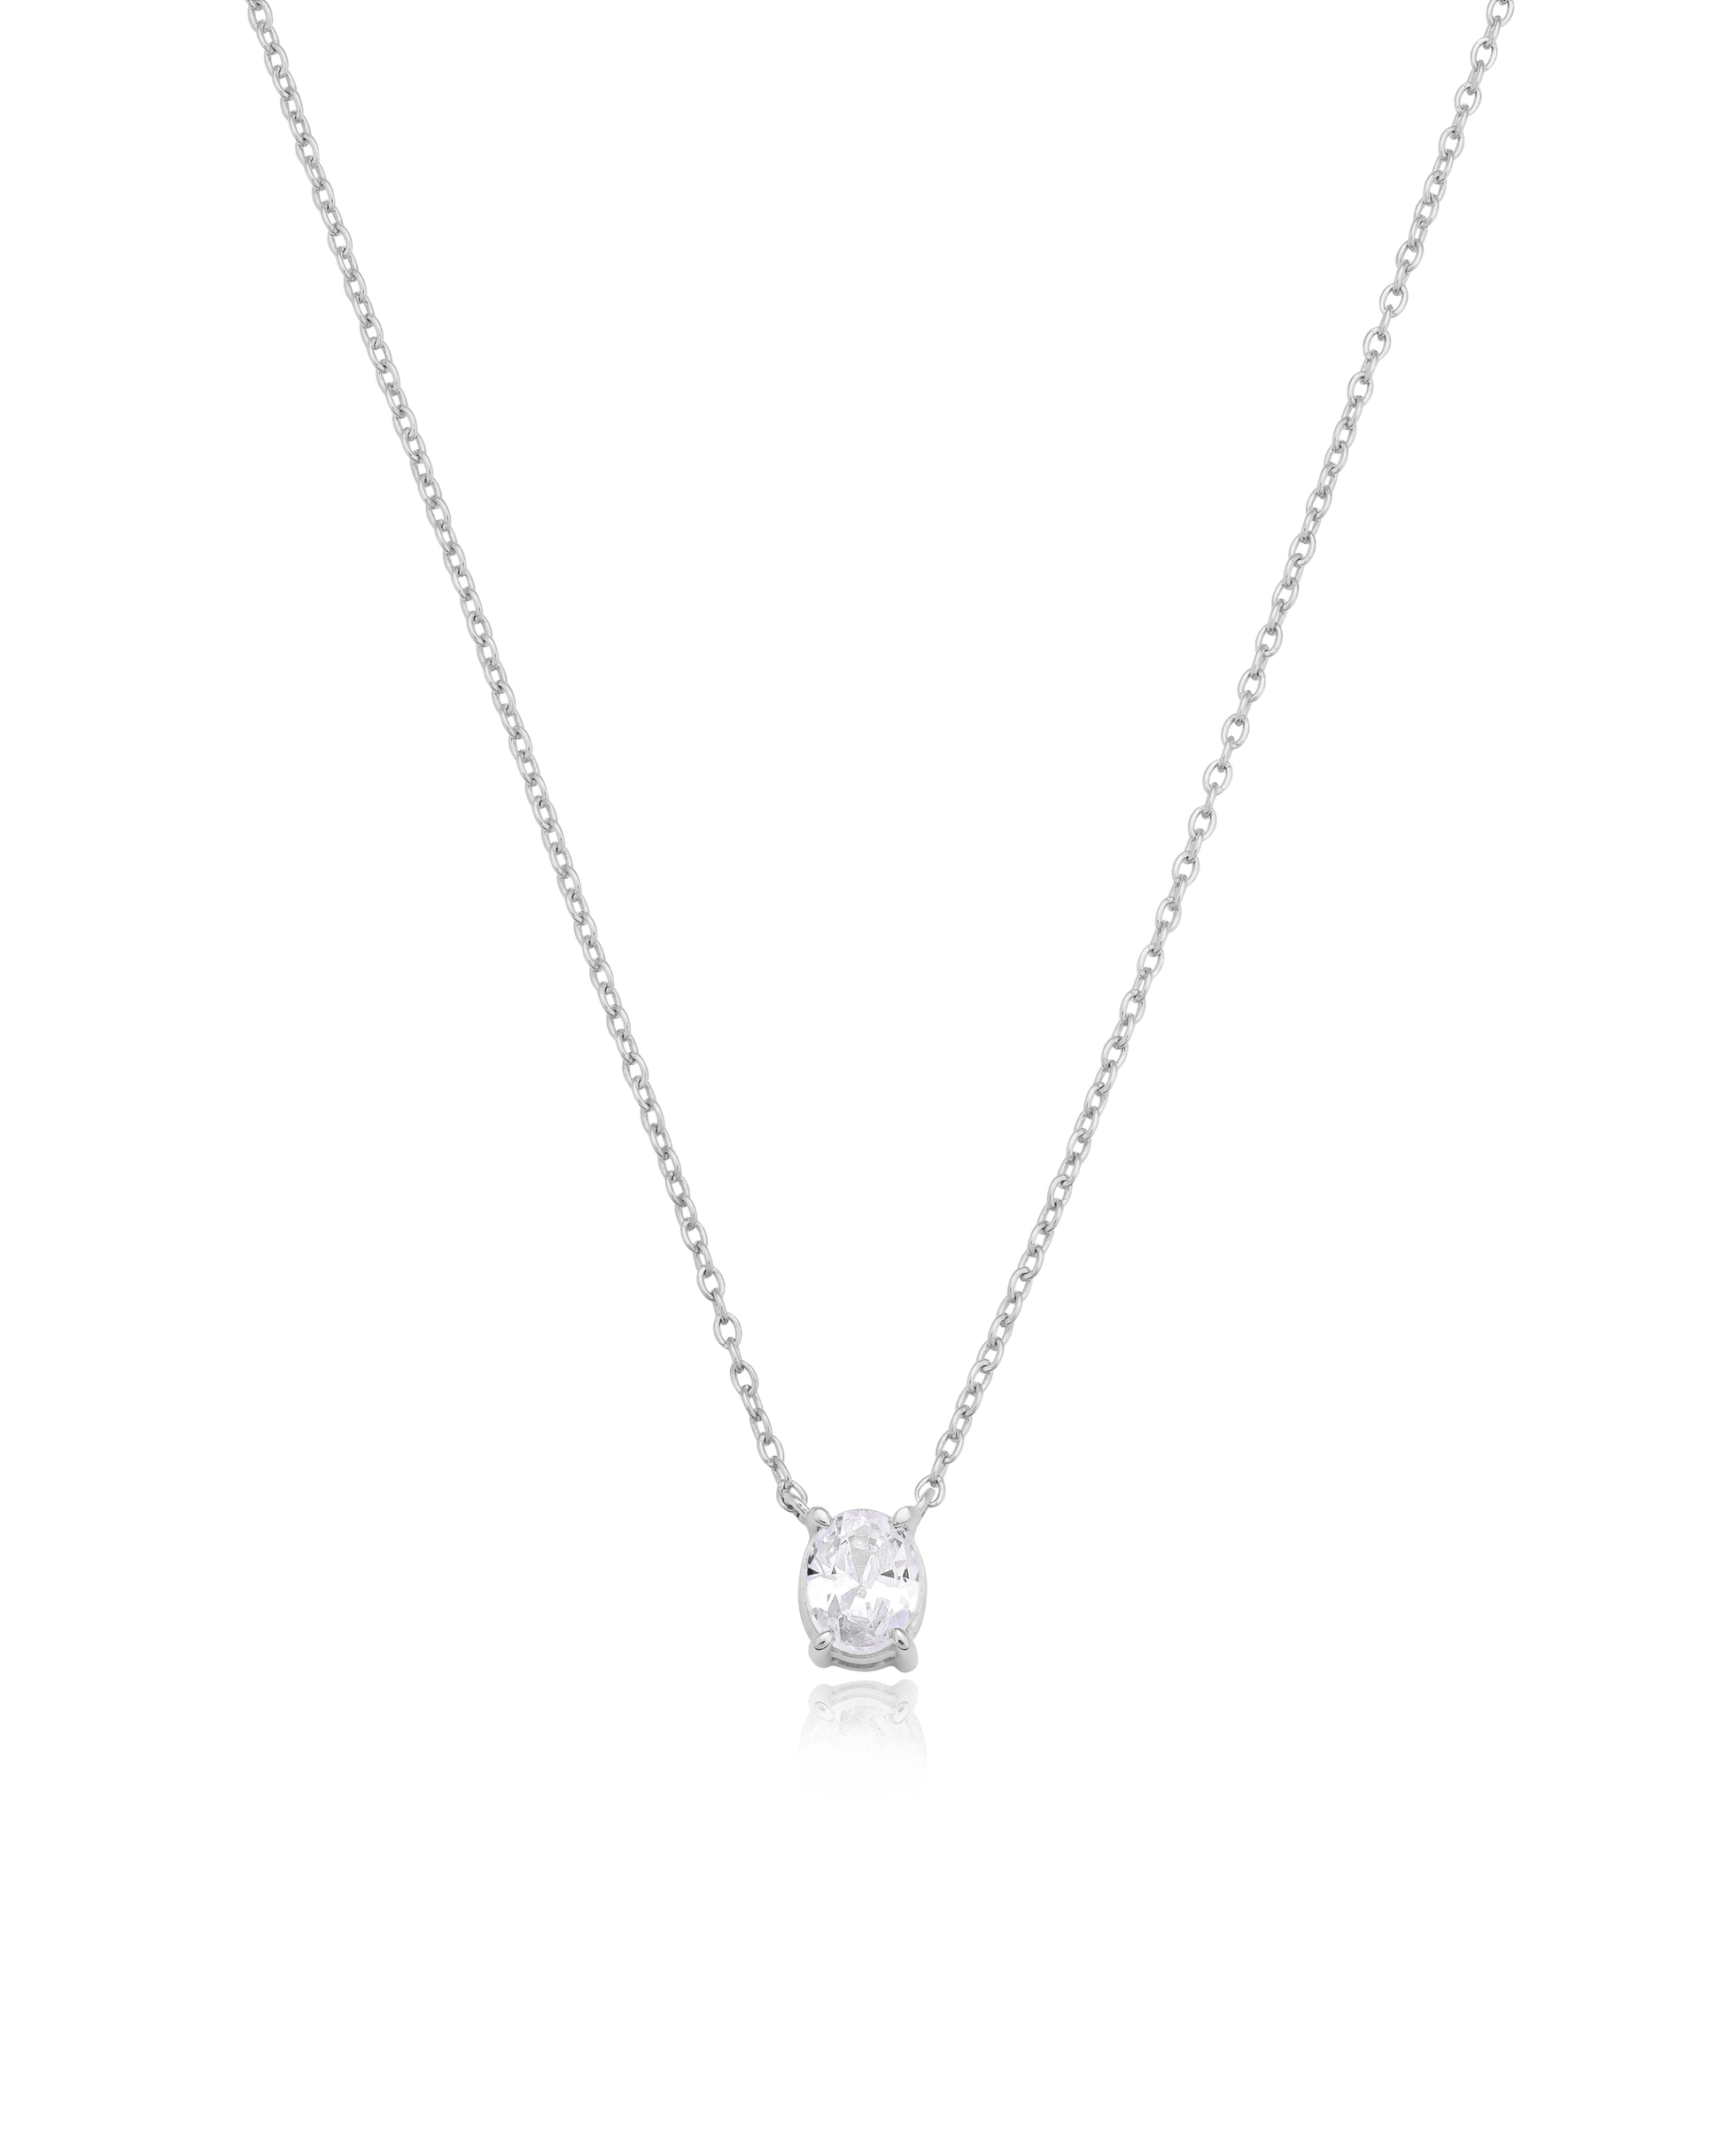 Oval Solitaire Diamond Necklace - 18K Gold Vermeil Necklaces magal-dev 